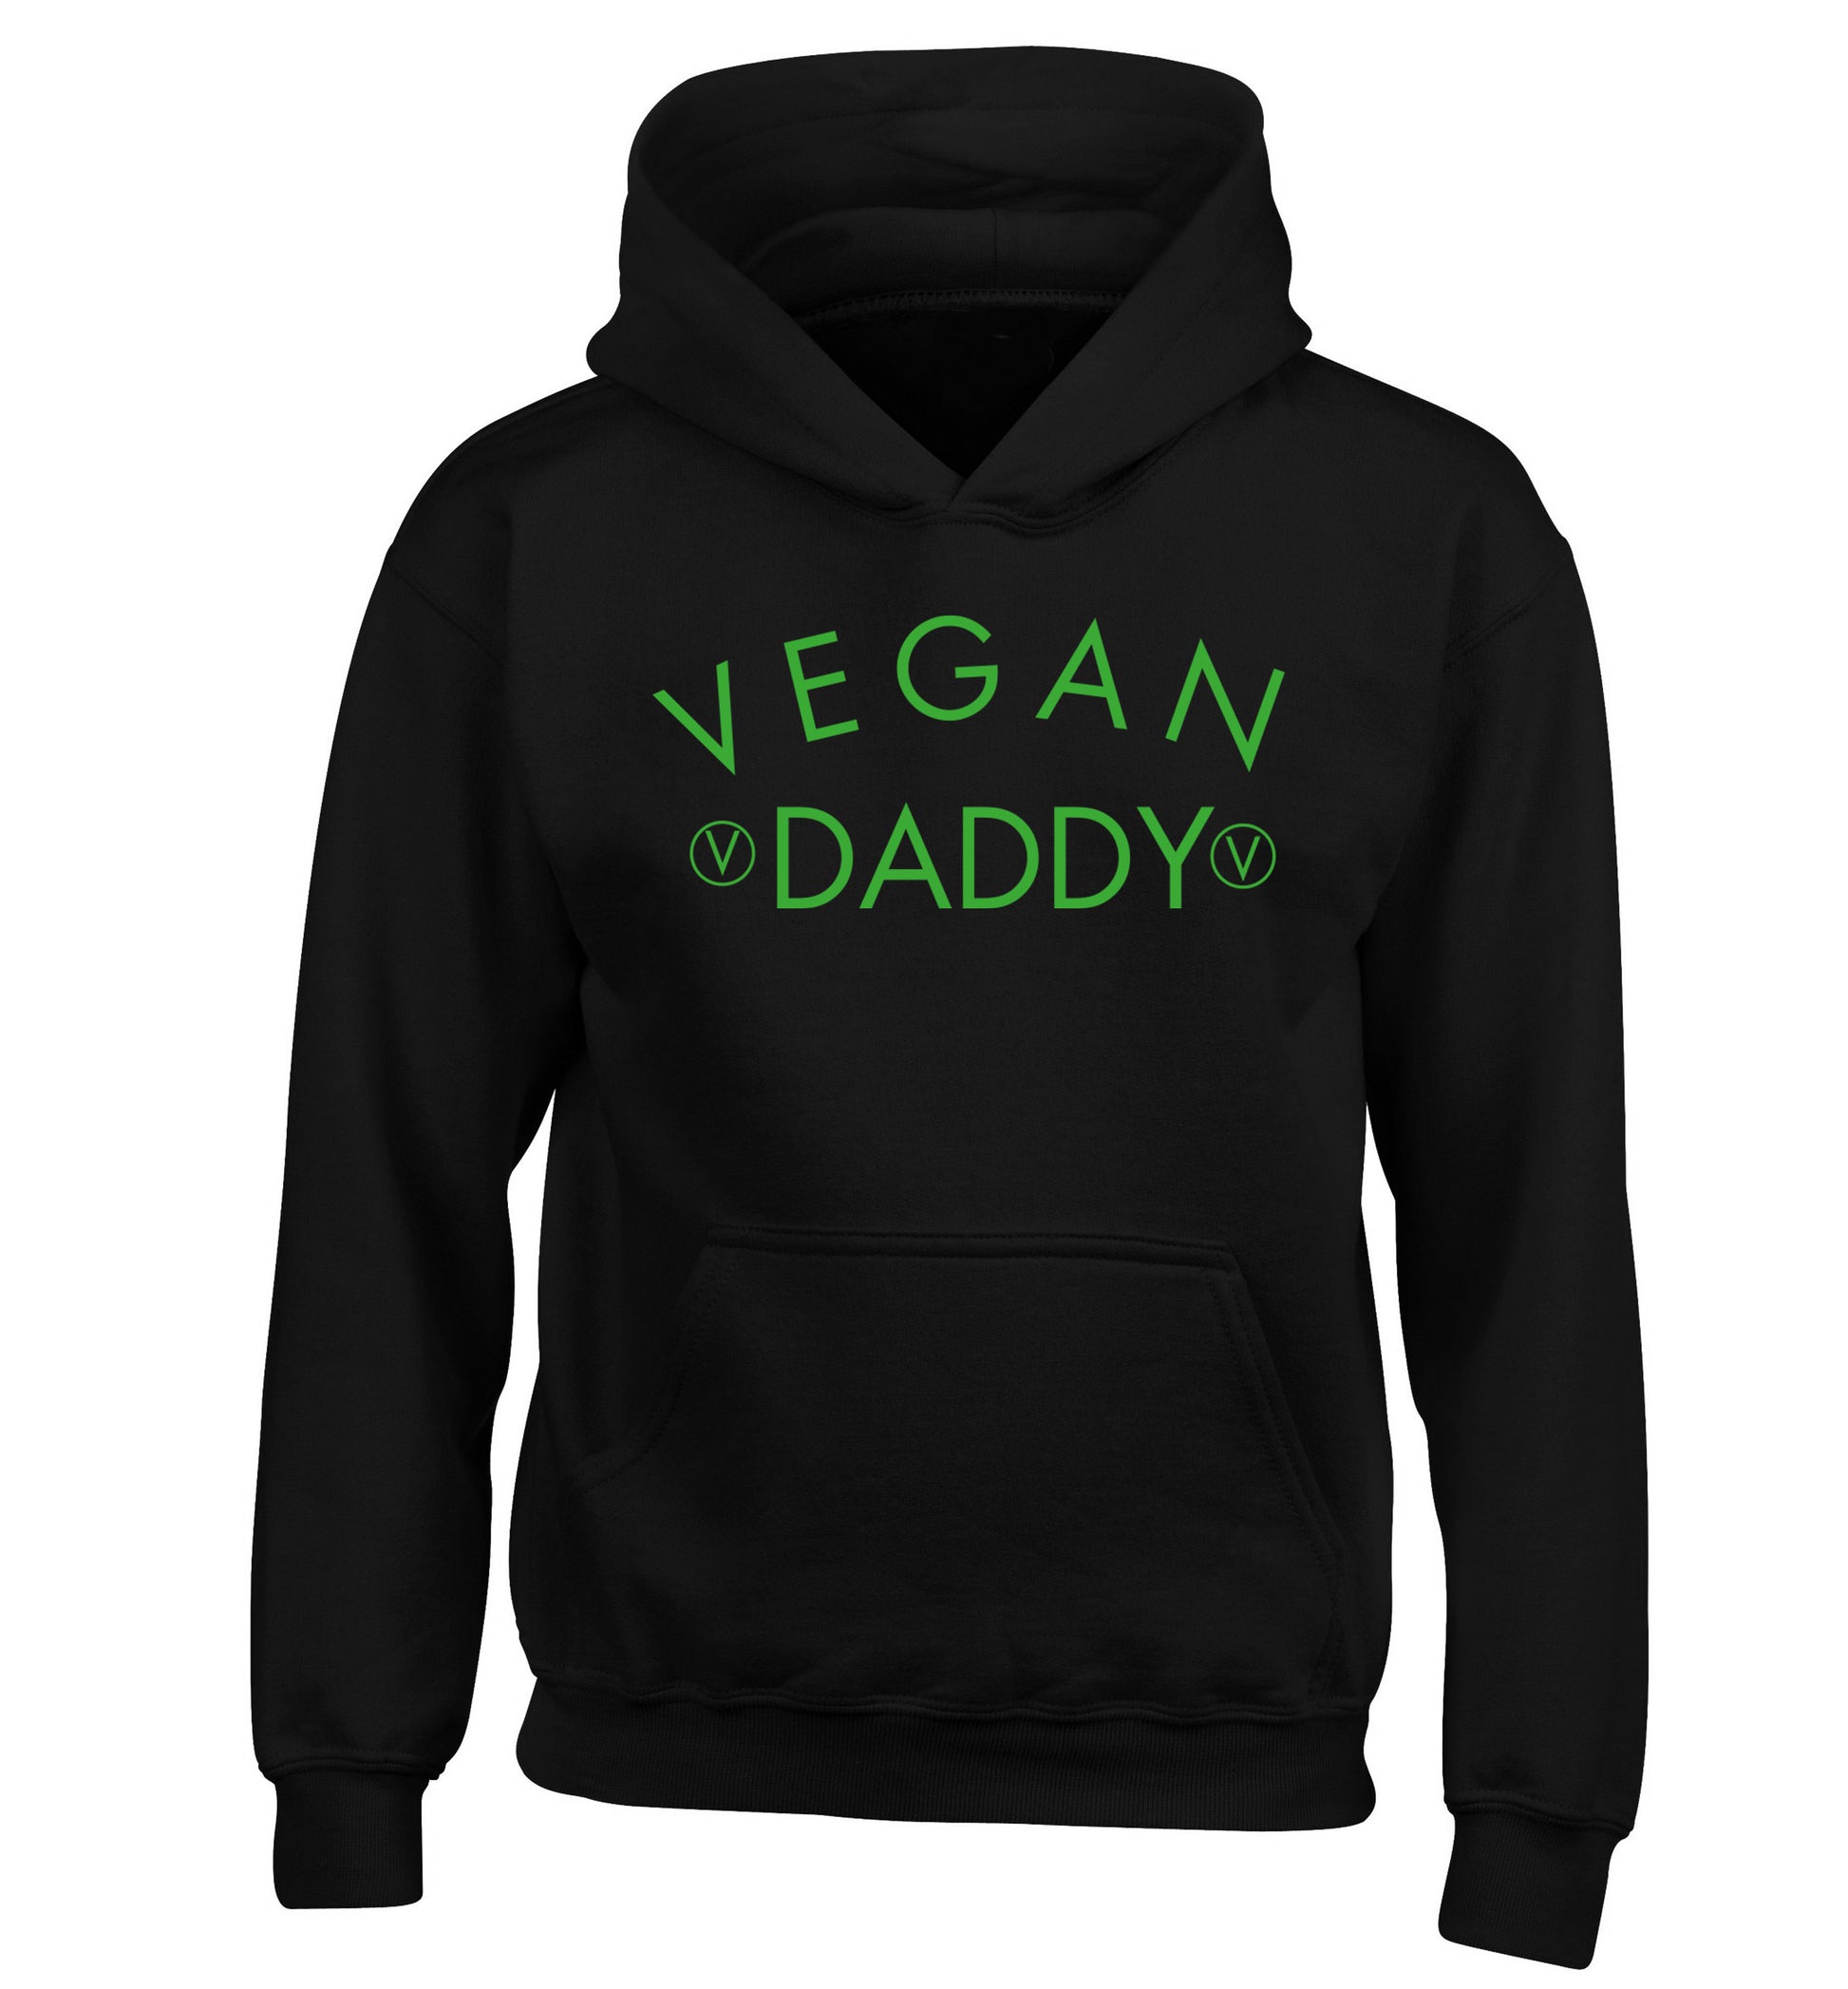 Vegan daddy children's black hoodie 12-14 Years